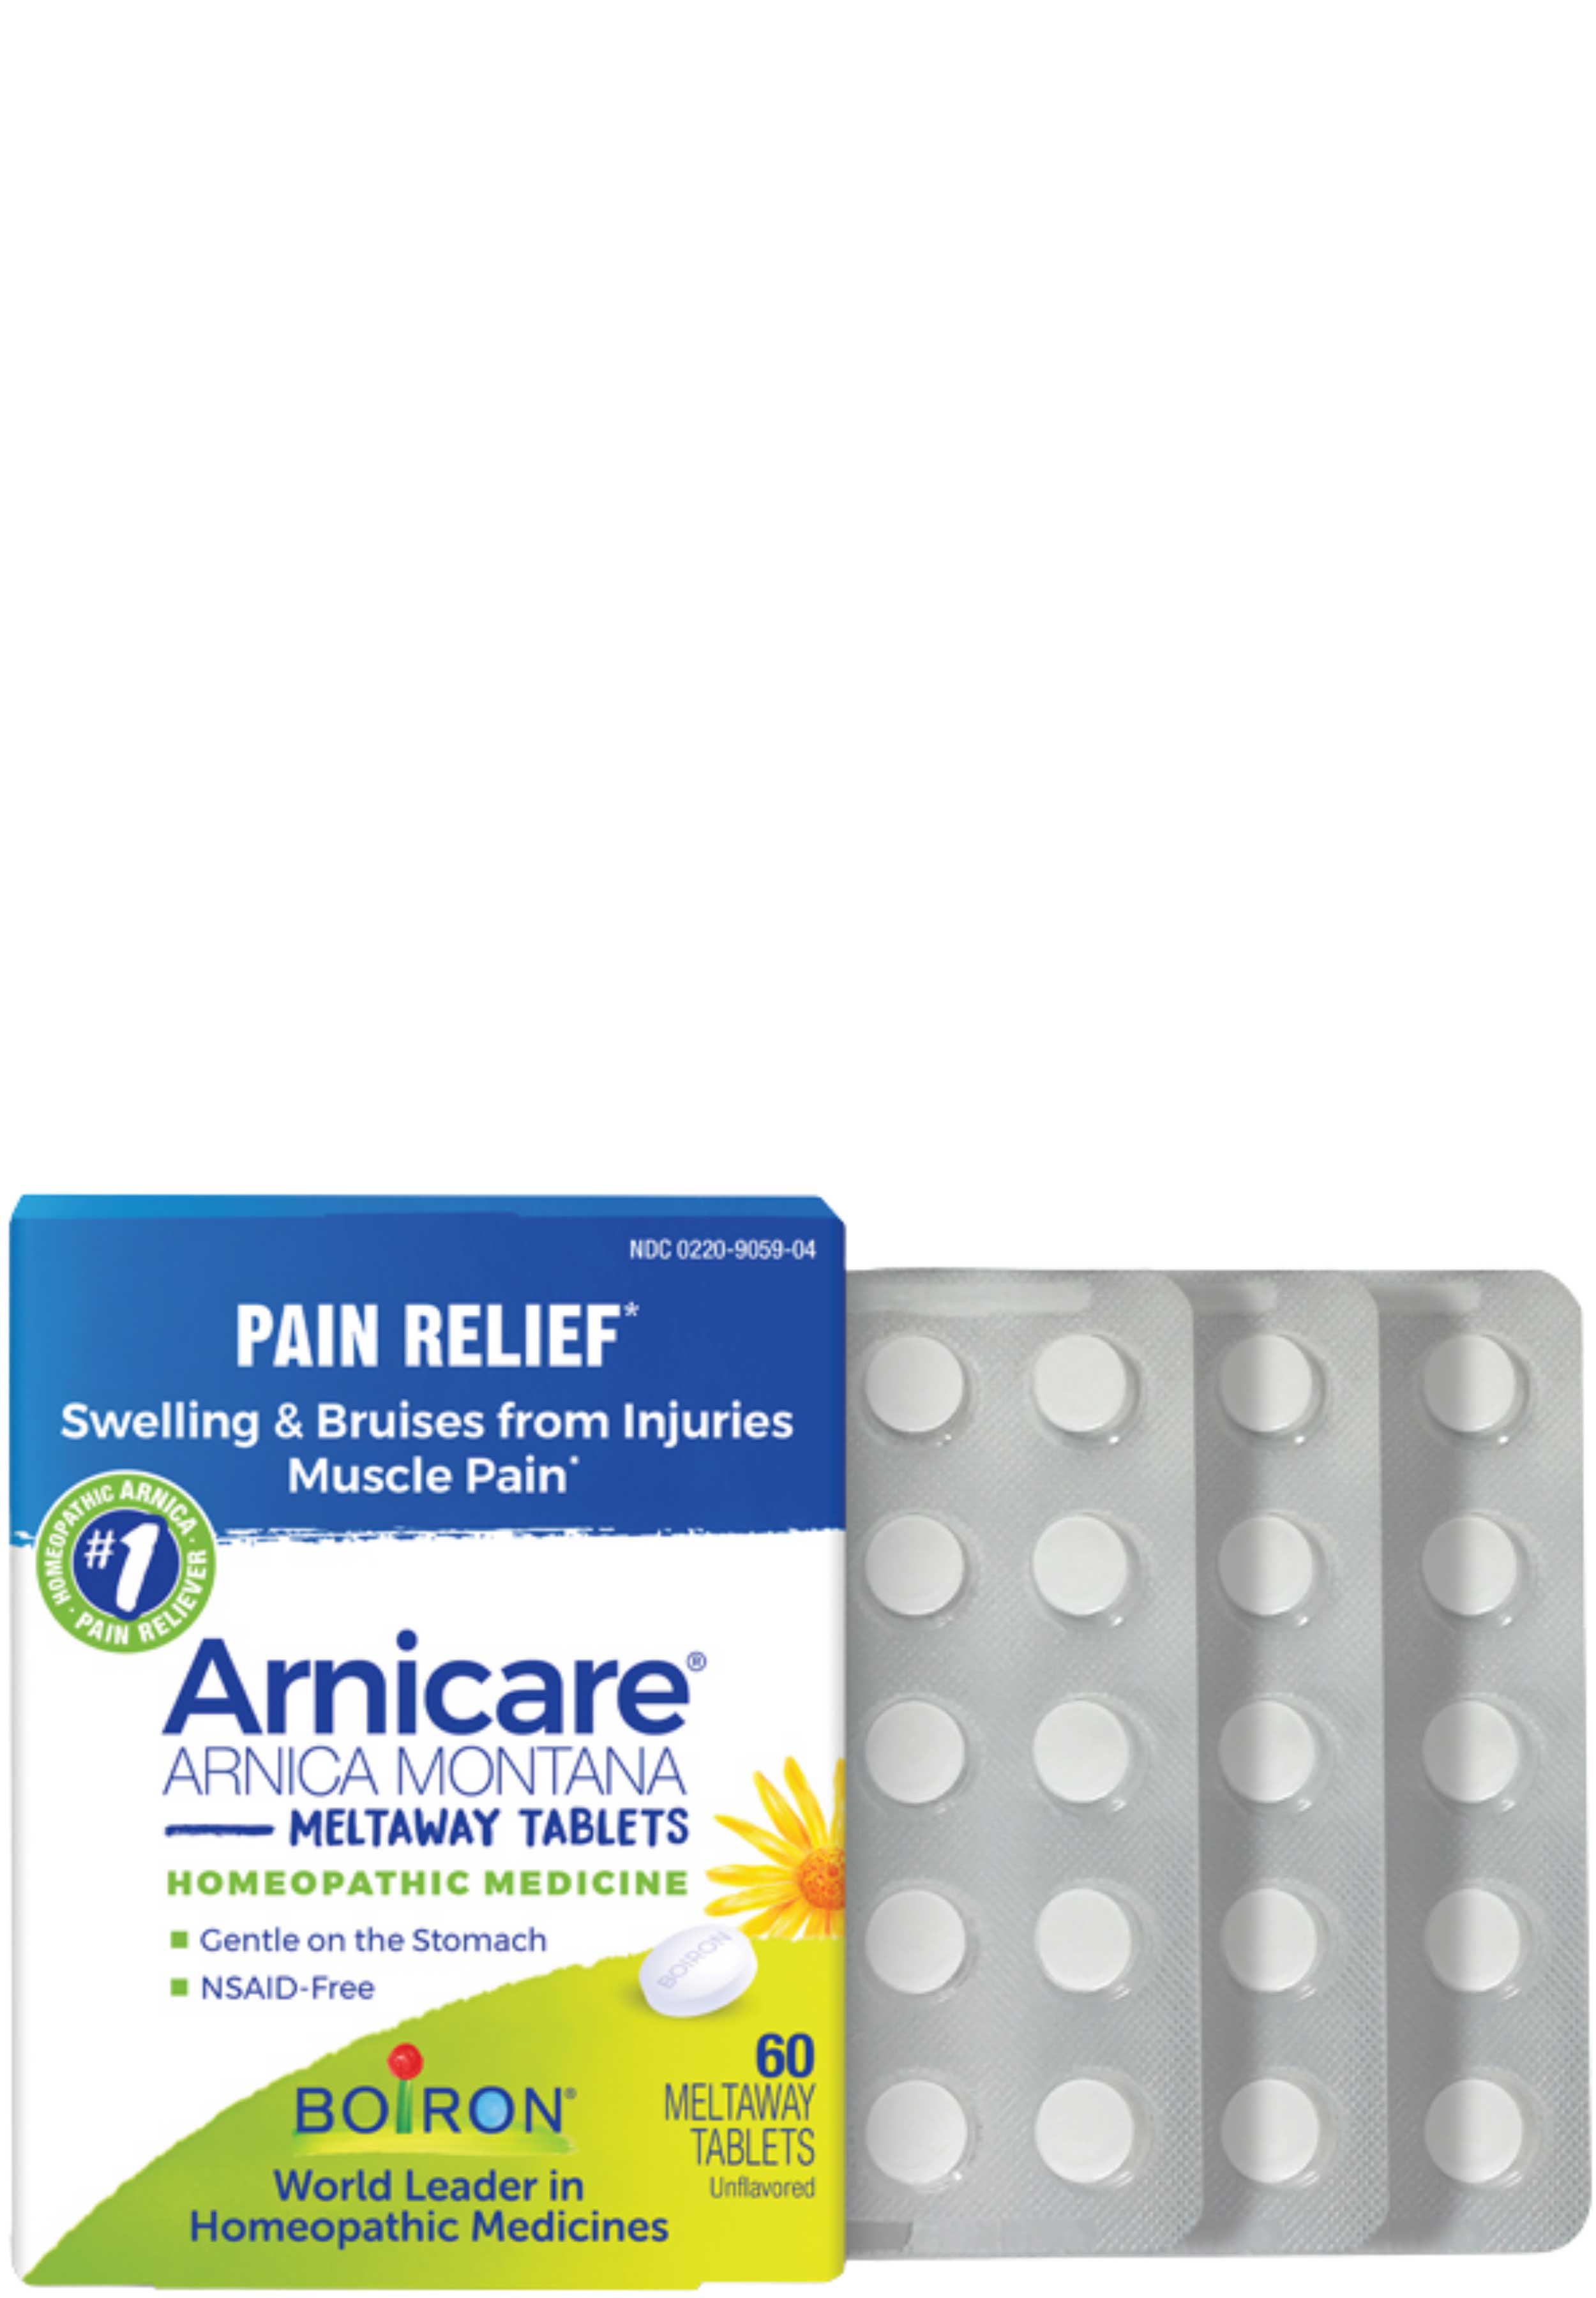 Boiron Homeopathics Arnicare Tablets